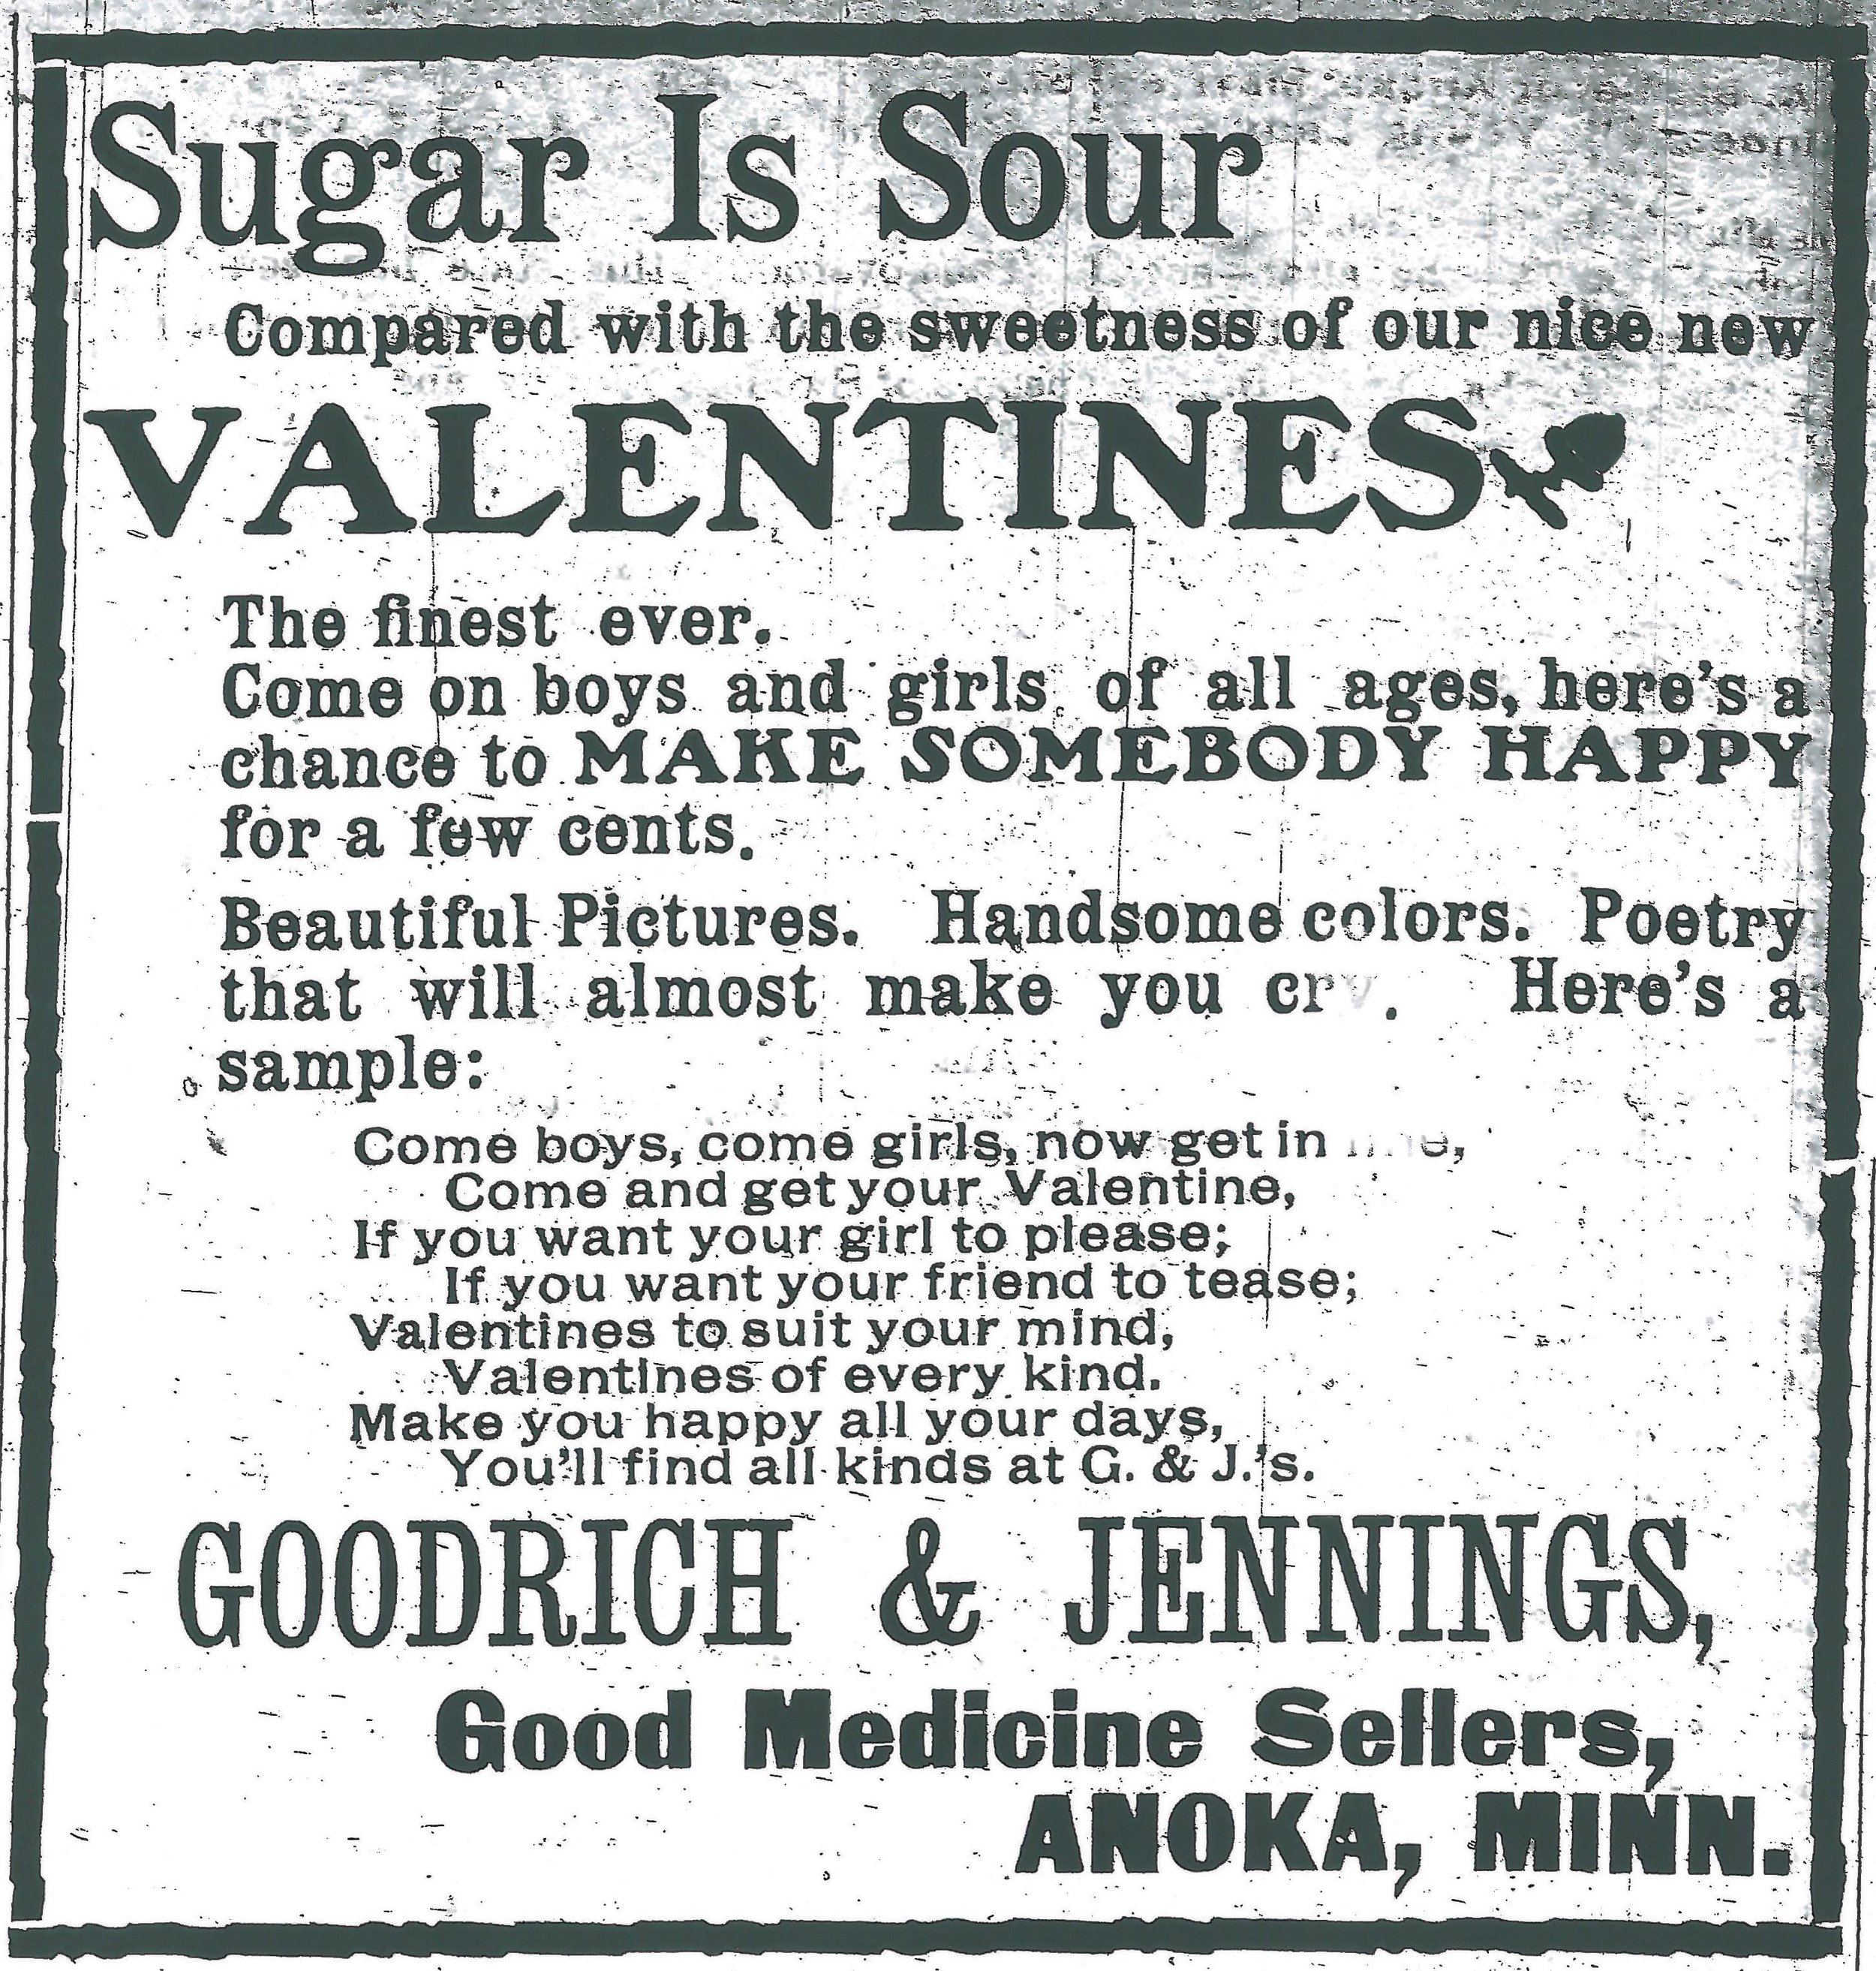 SugarIsSourAd_2.11.1903.jpg